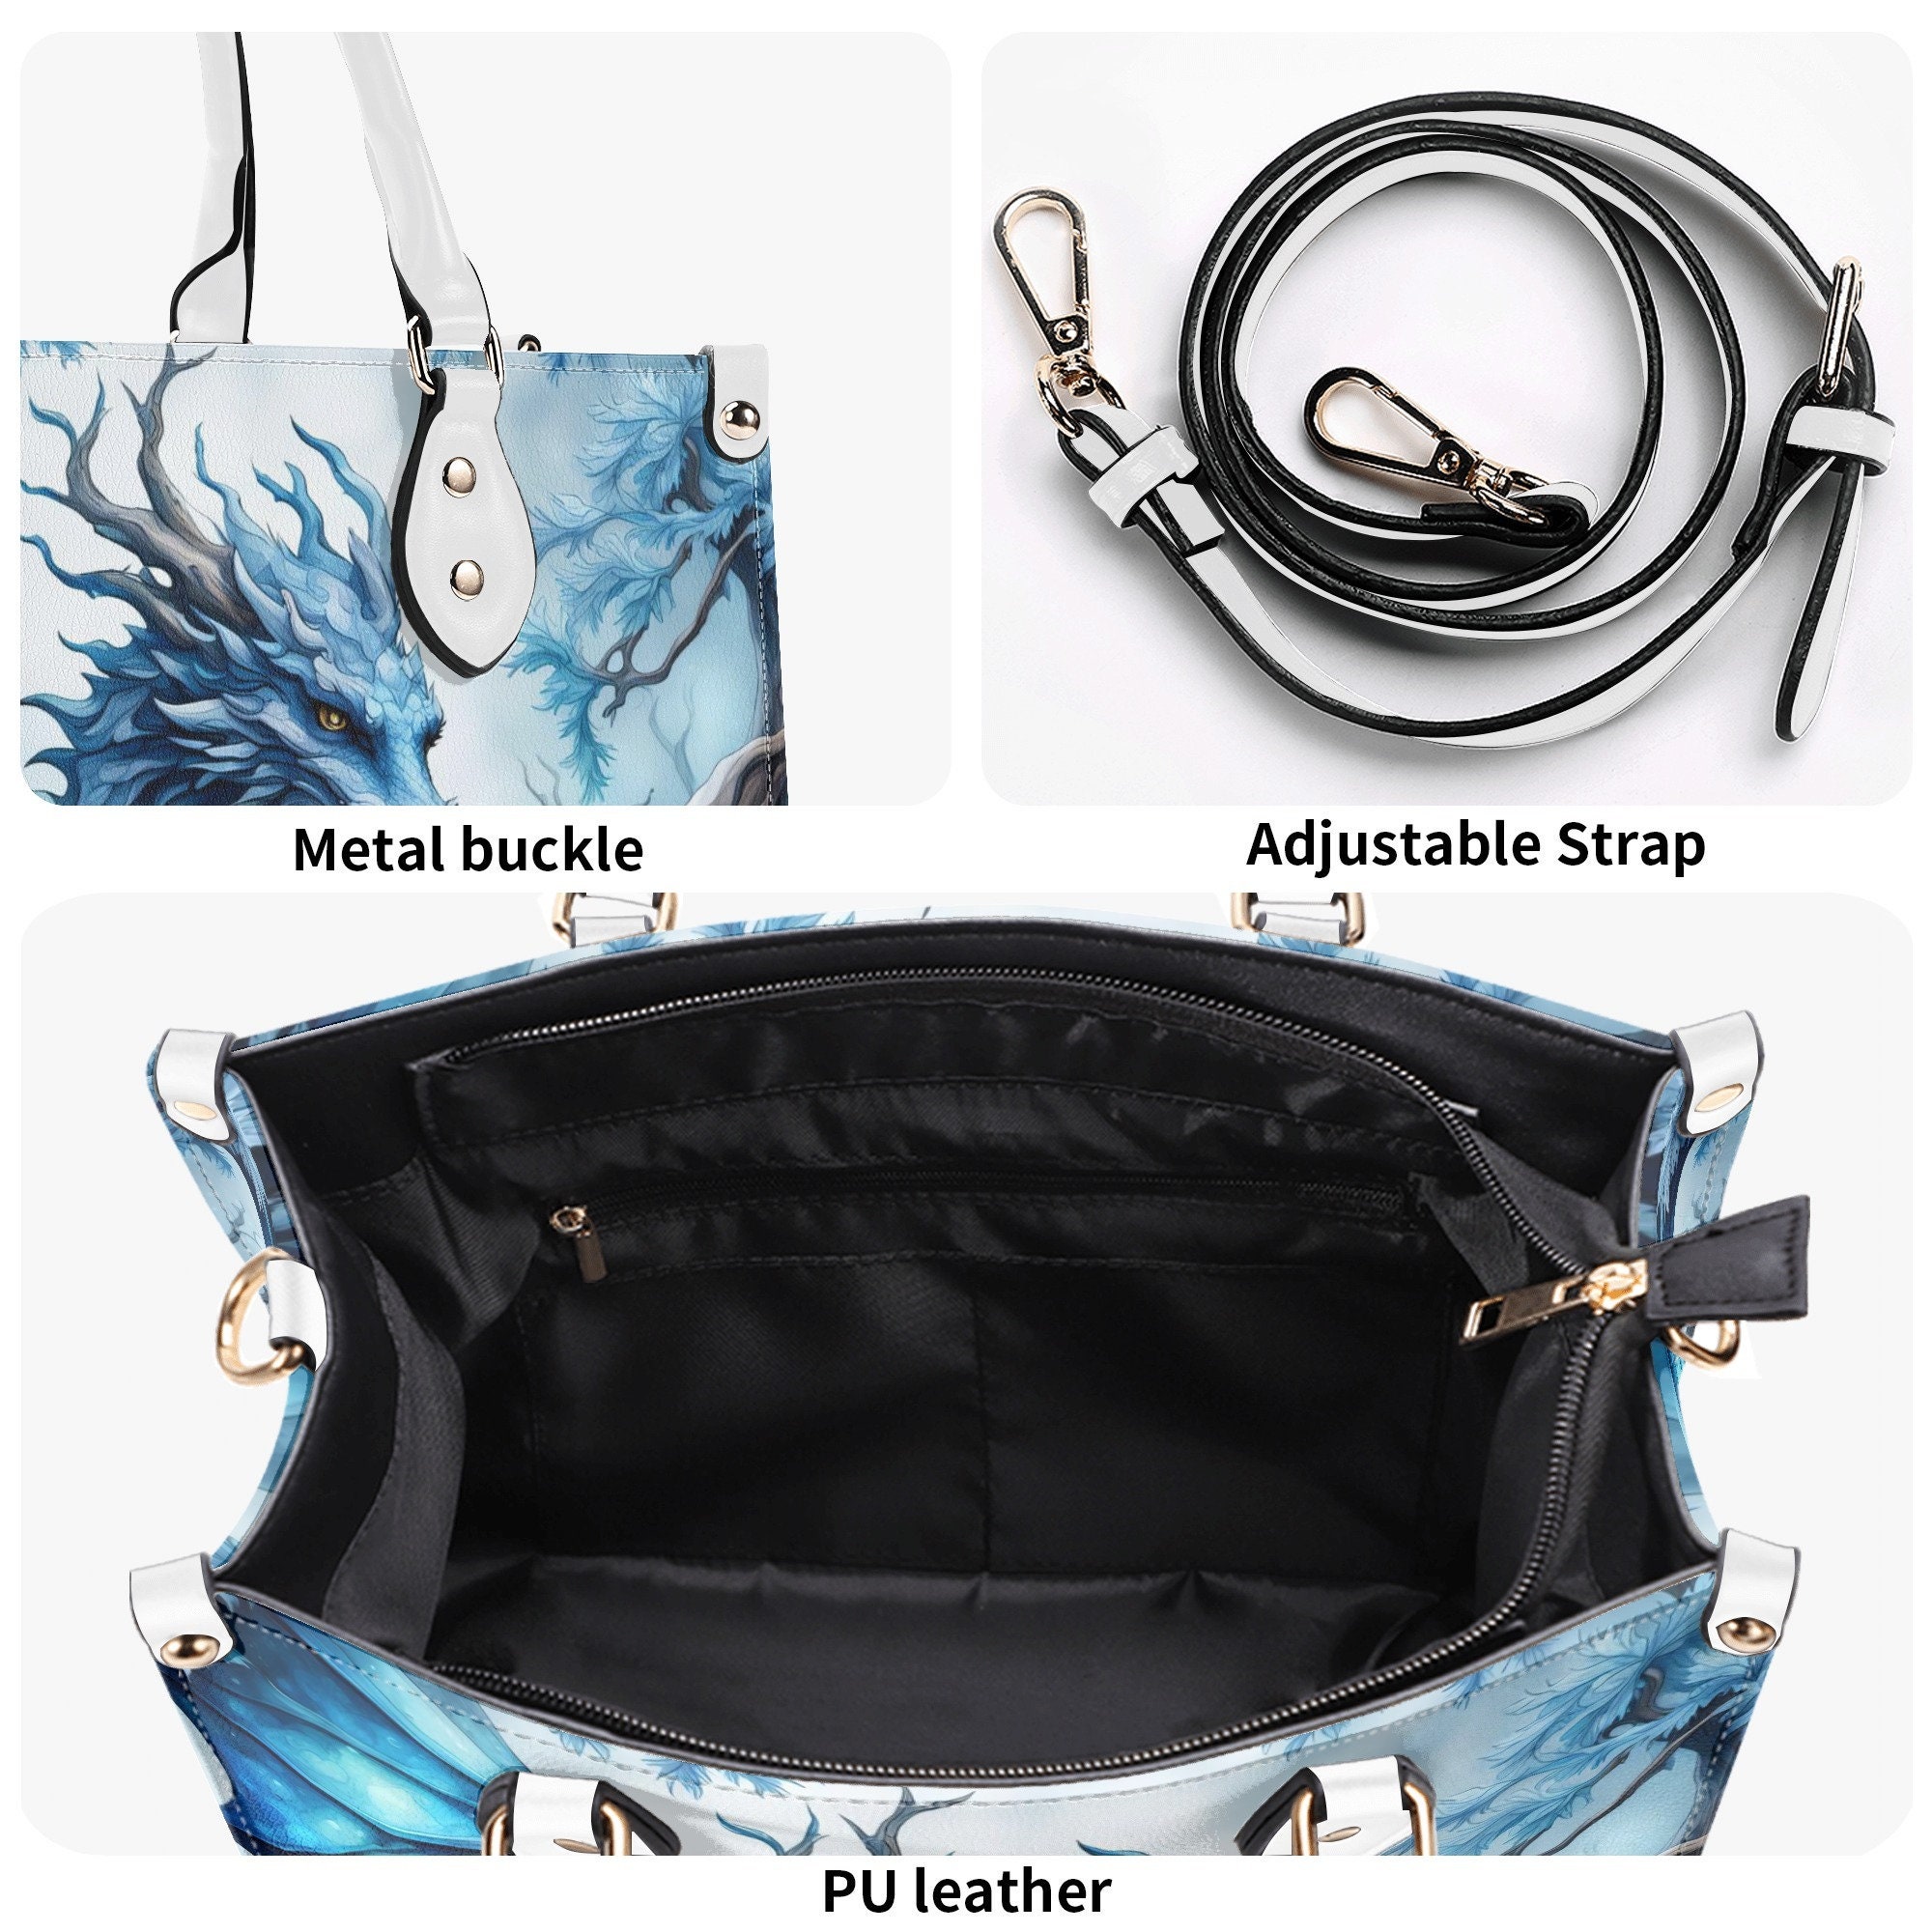 Blue Ice Dragon Handbag Purse, Winter Faux Leather Bag, Unique Fantasy Womens Shoulder Bag